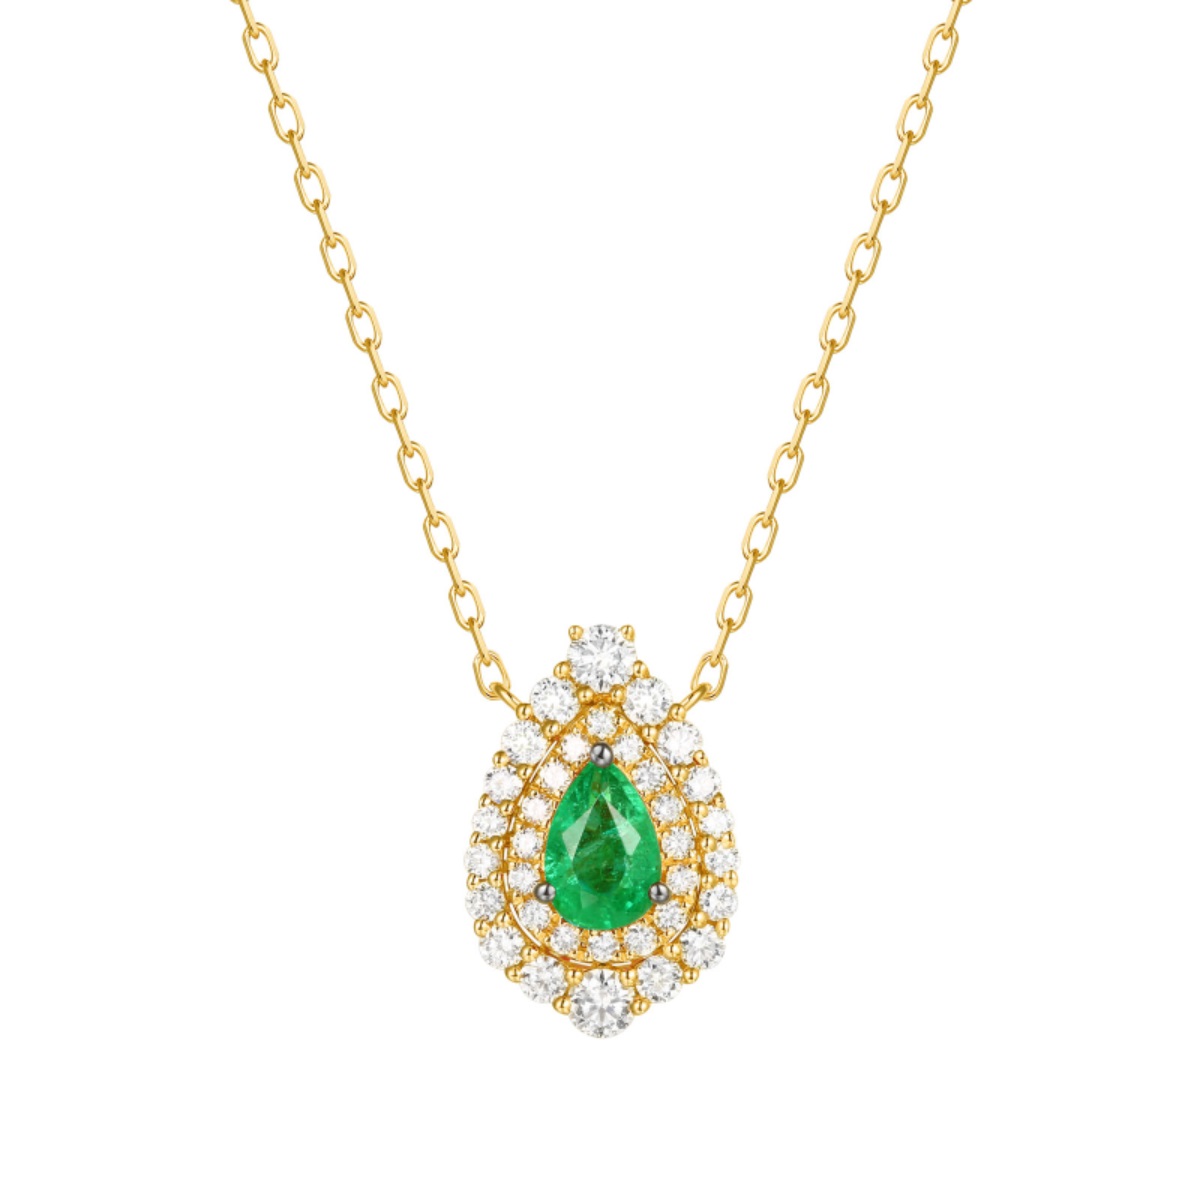 NL35735EME – 18K Yellow Gold Diamond and Gemstone Necklace, 0.8 TCW